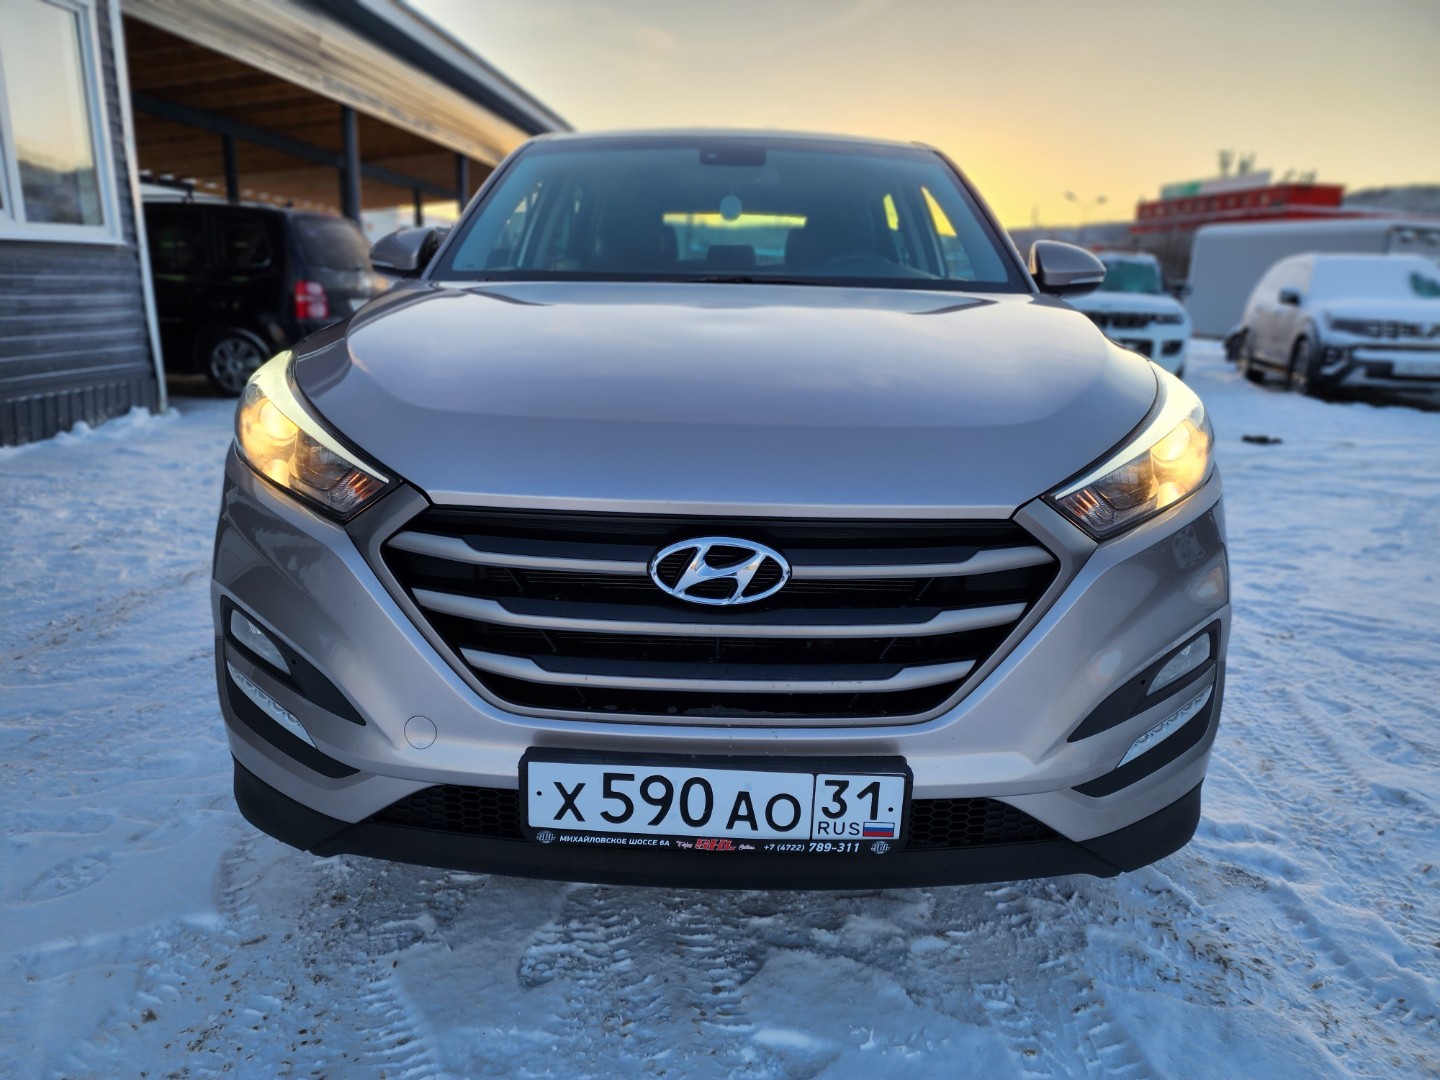 Hyundai Tucson, 2016 г.в., пробег 145 706 км, цена, фото, Мурманск